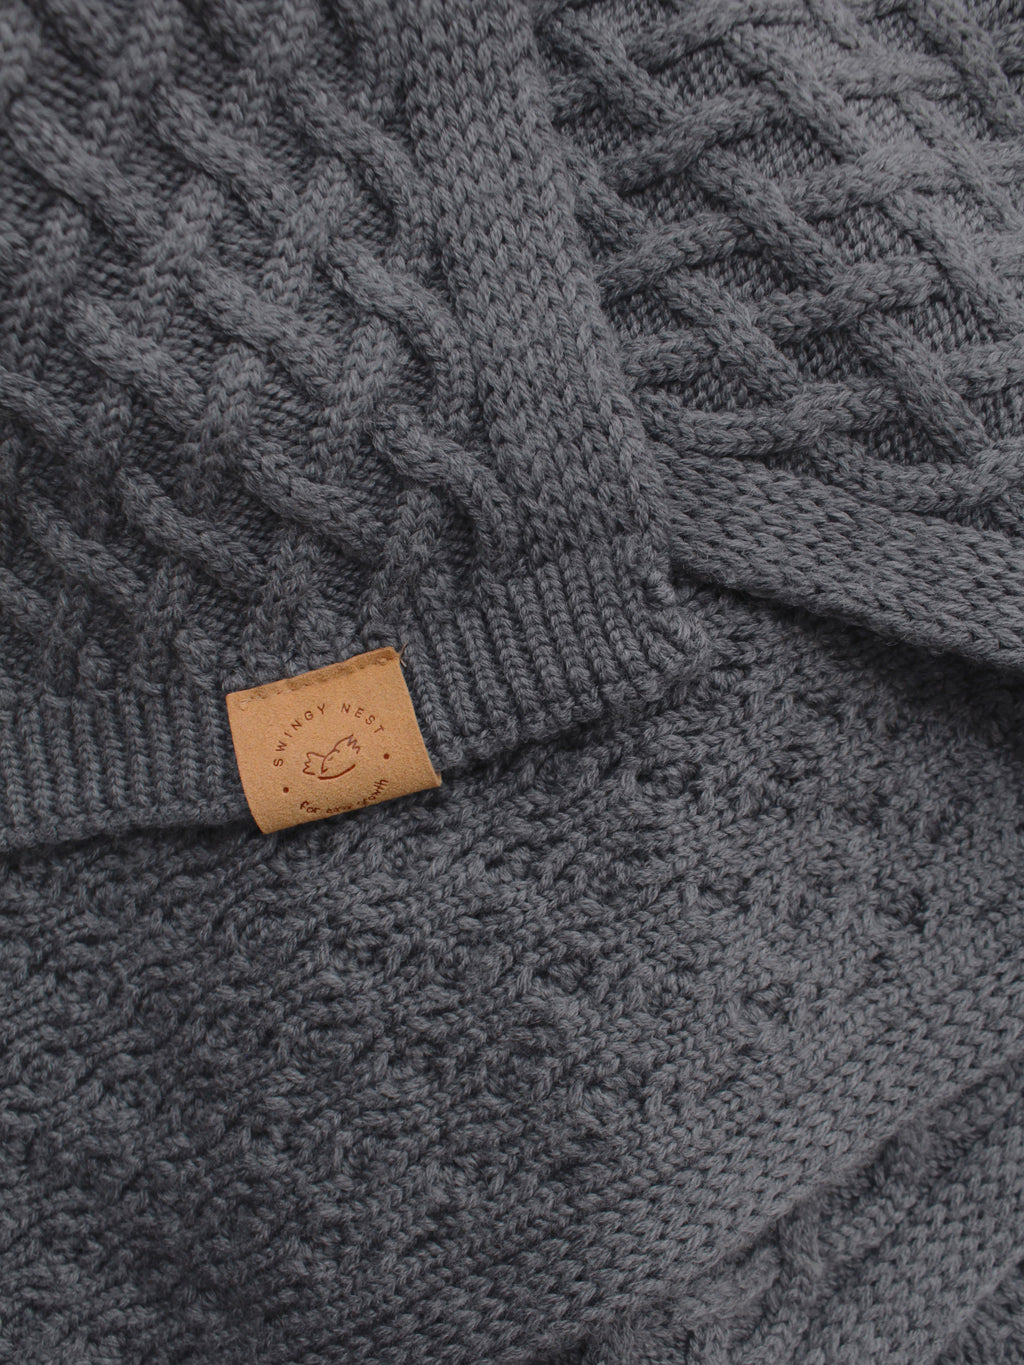 100% Merino Wool Luxury Baby Blanket | BRAIDS, Dark Grey